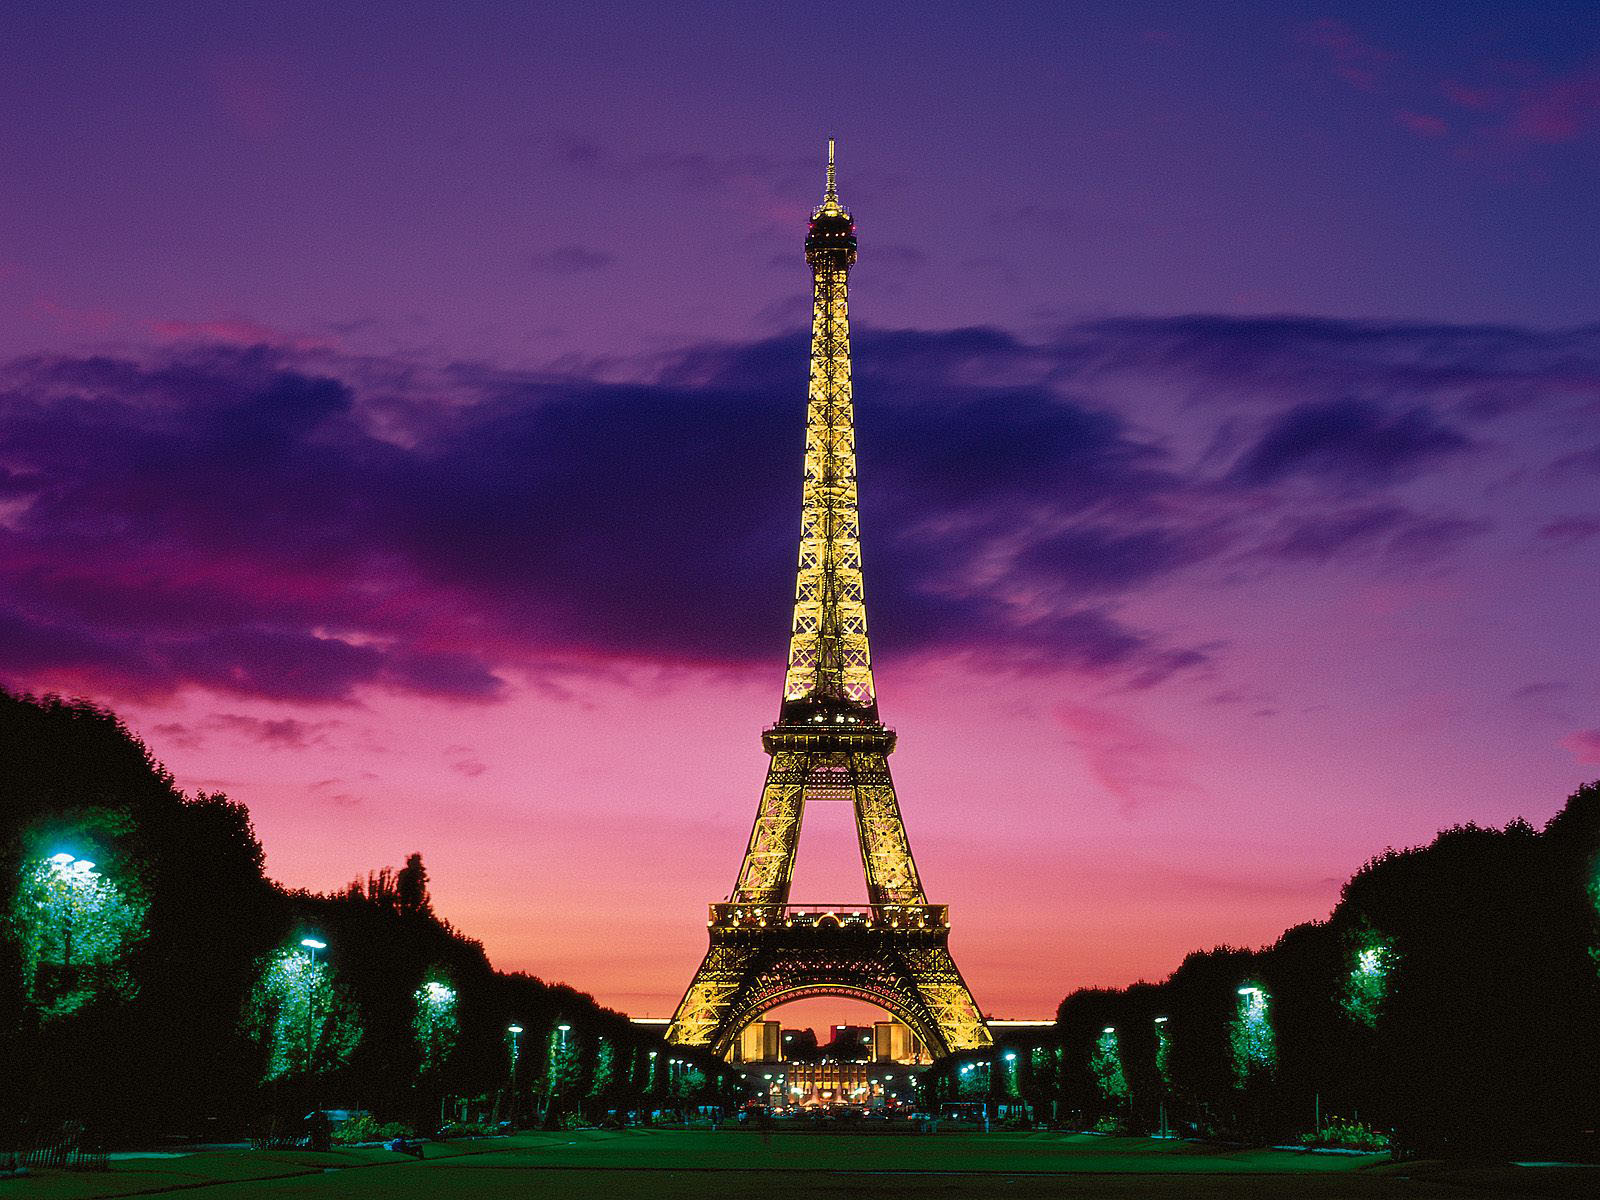 Eiffel Tower Paris France at Night